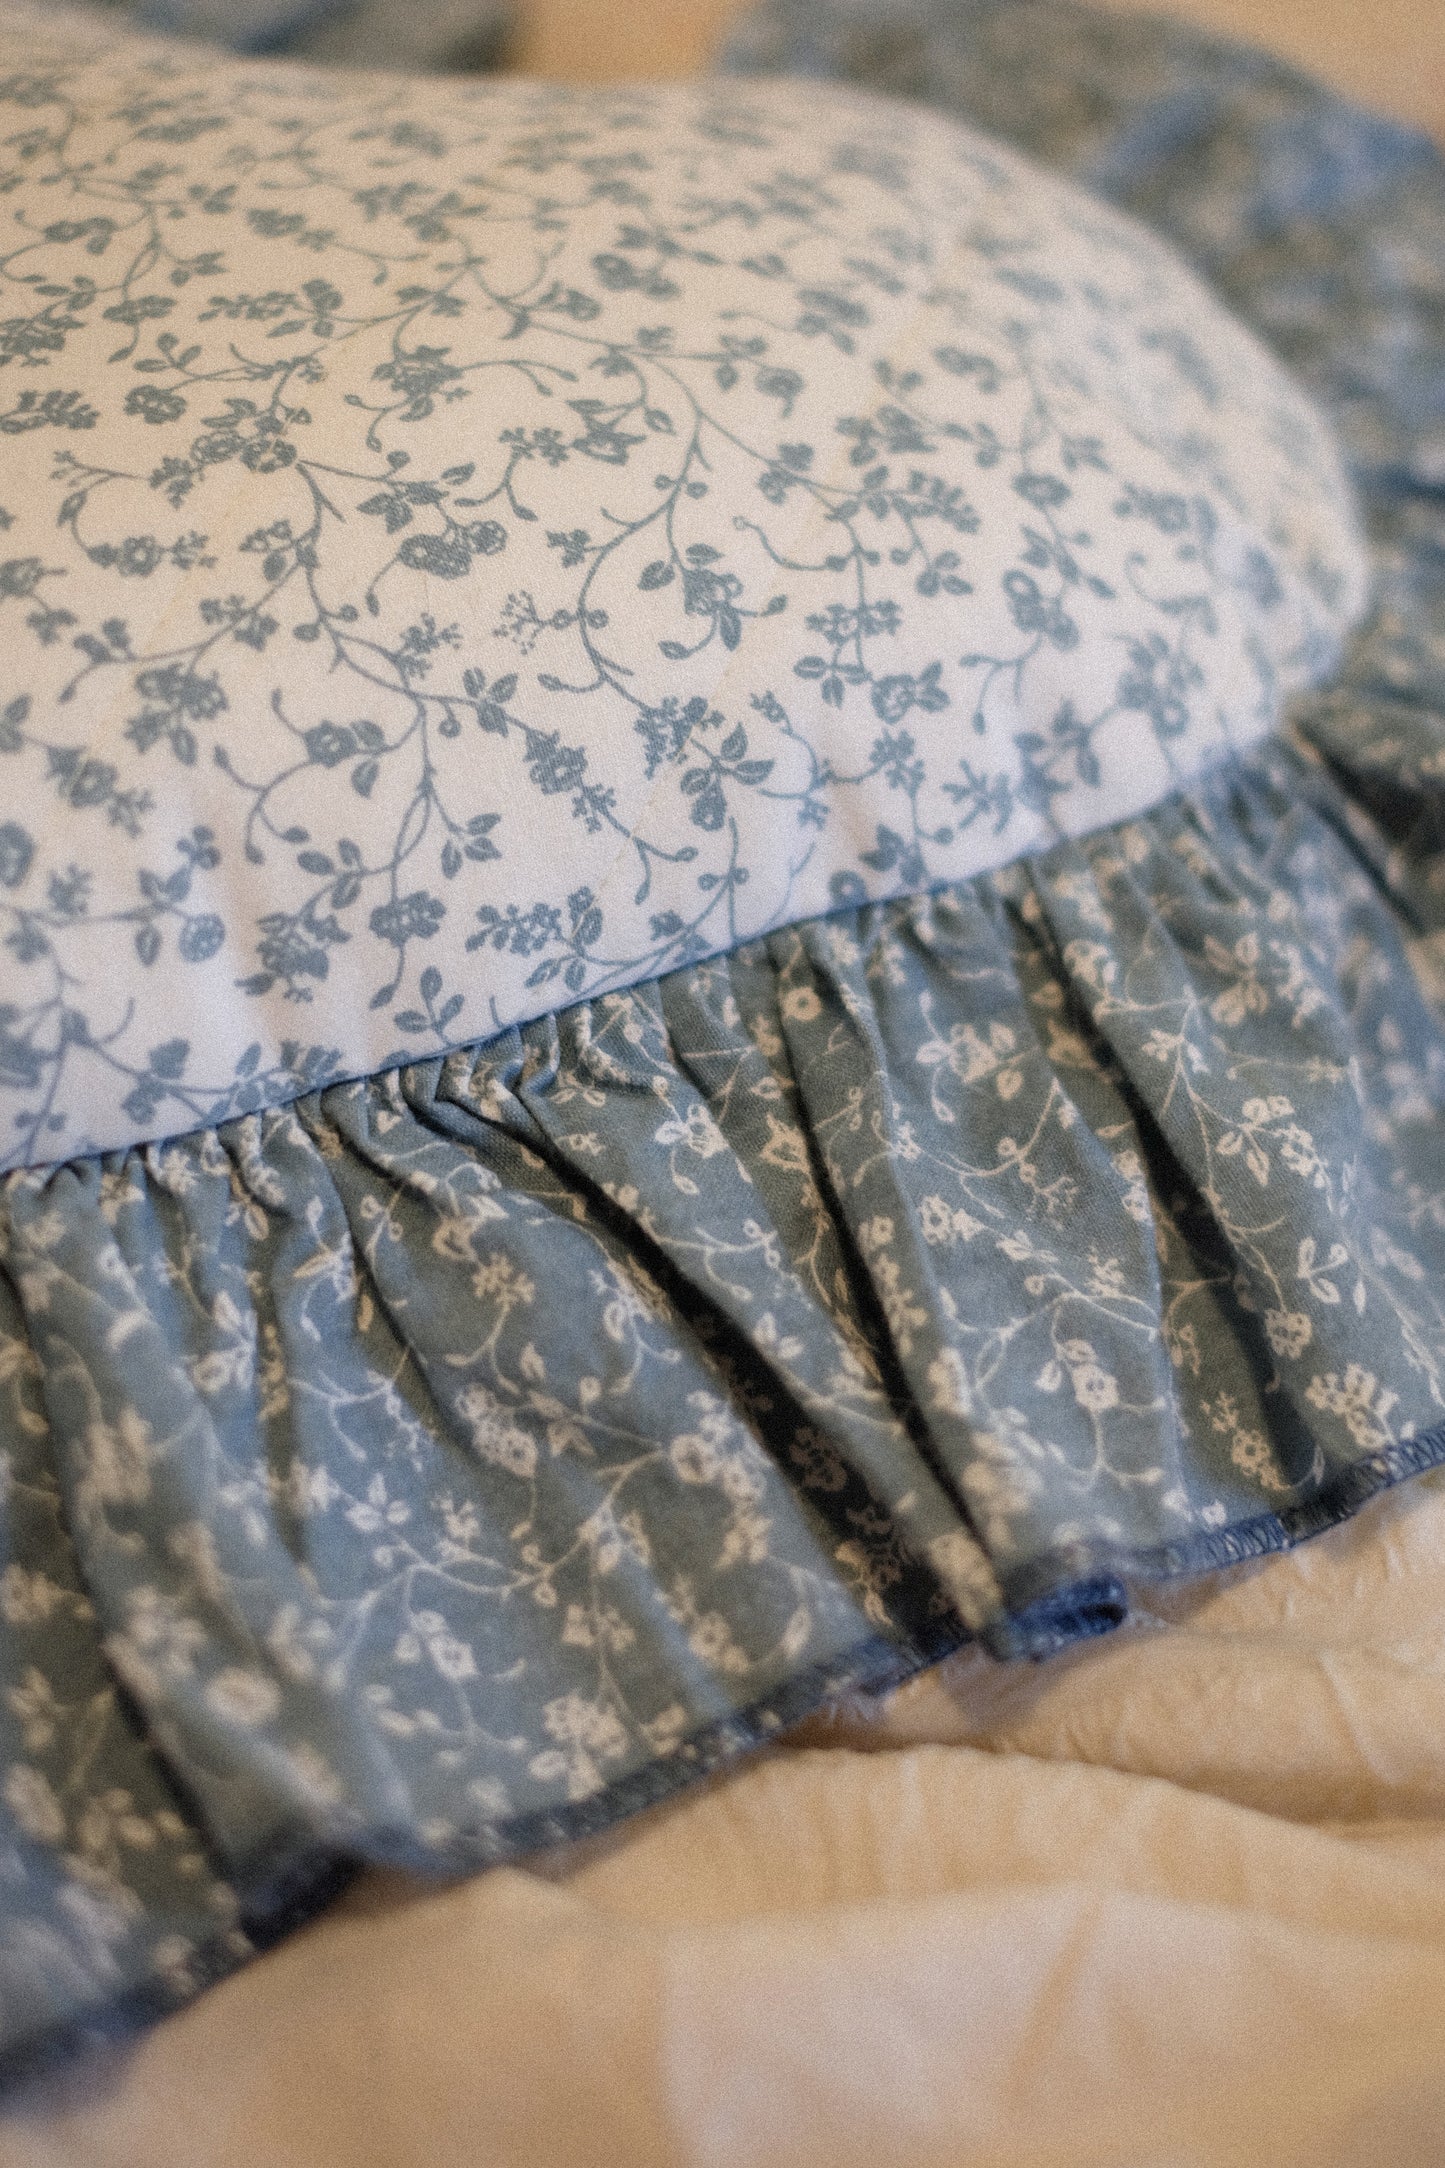 Handmade ruffled heart pillow - Something blue ♡